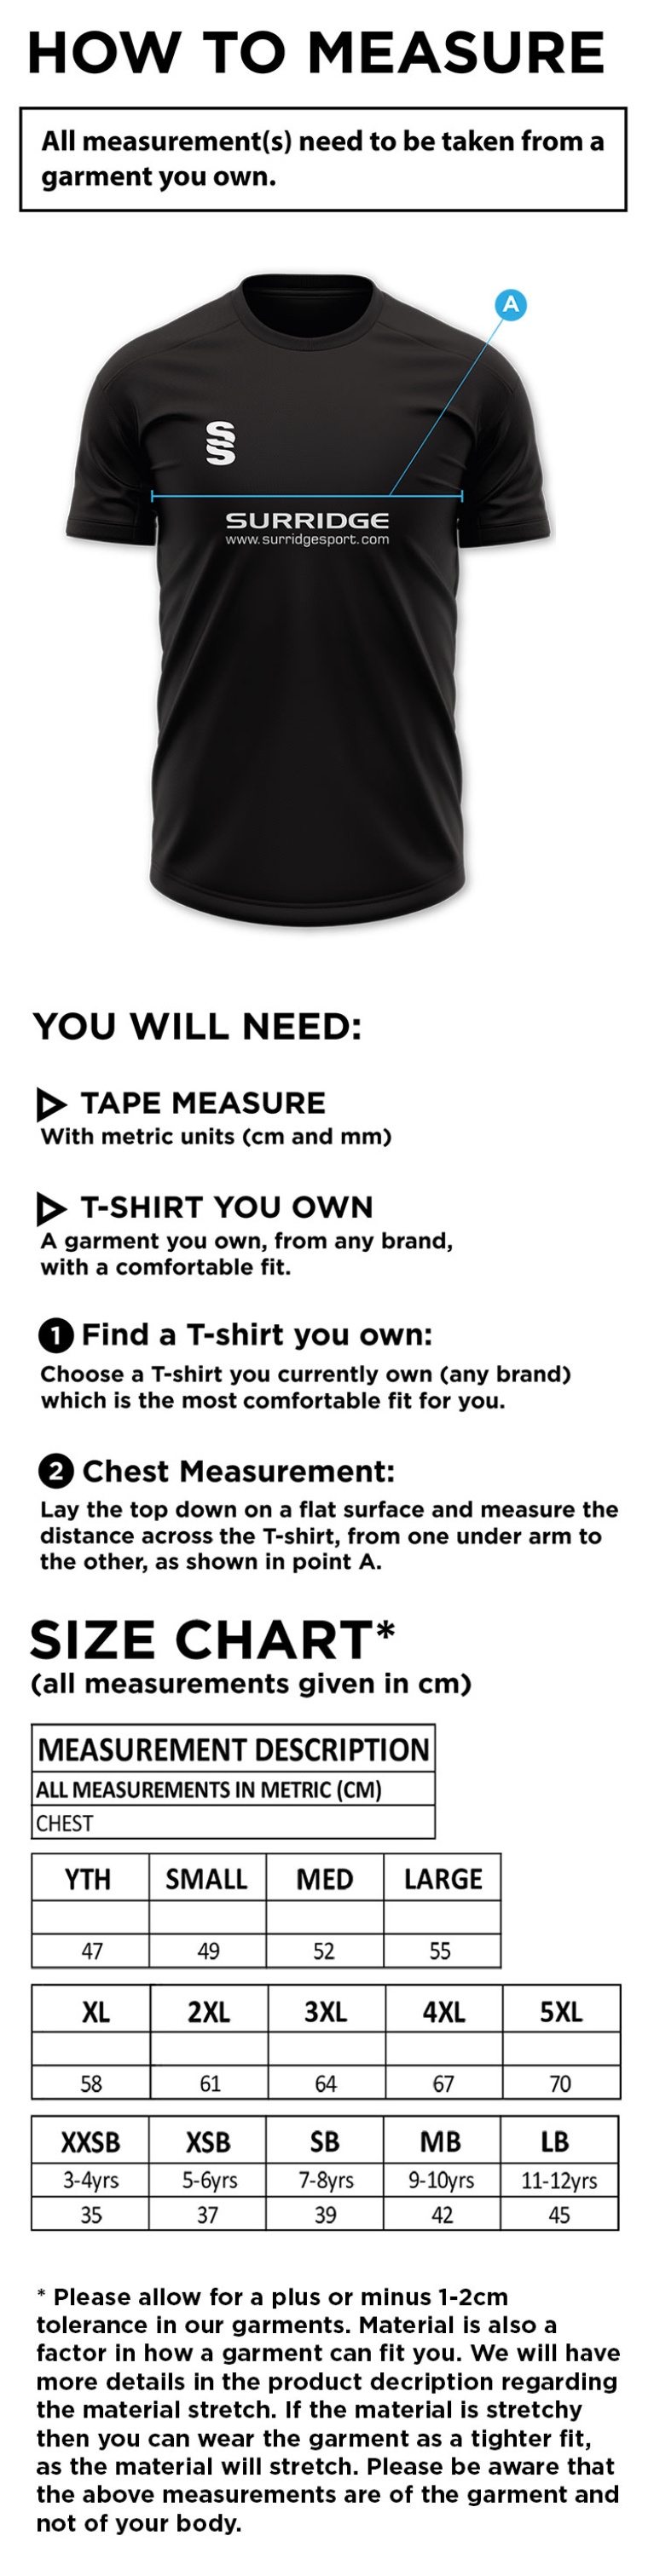 Byfleet CC Senior Blade Polo Shirt - Size Guide